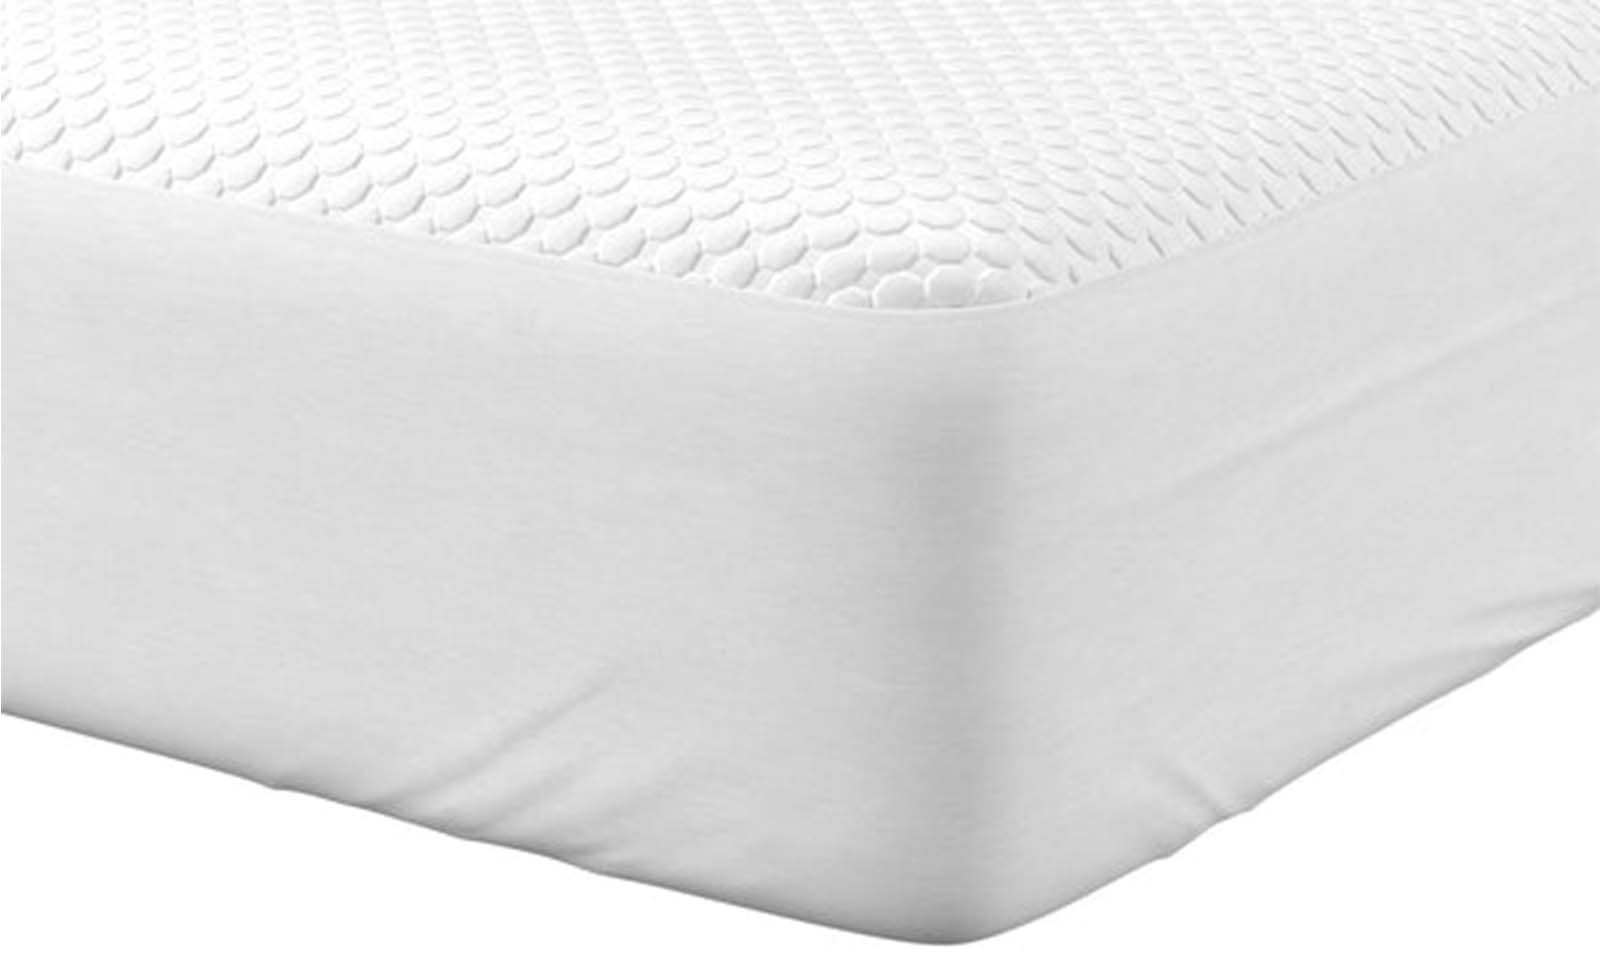 firmcare frio mattress protector queen